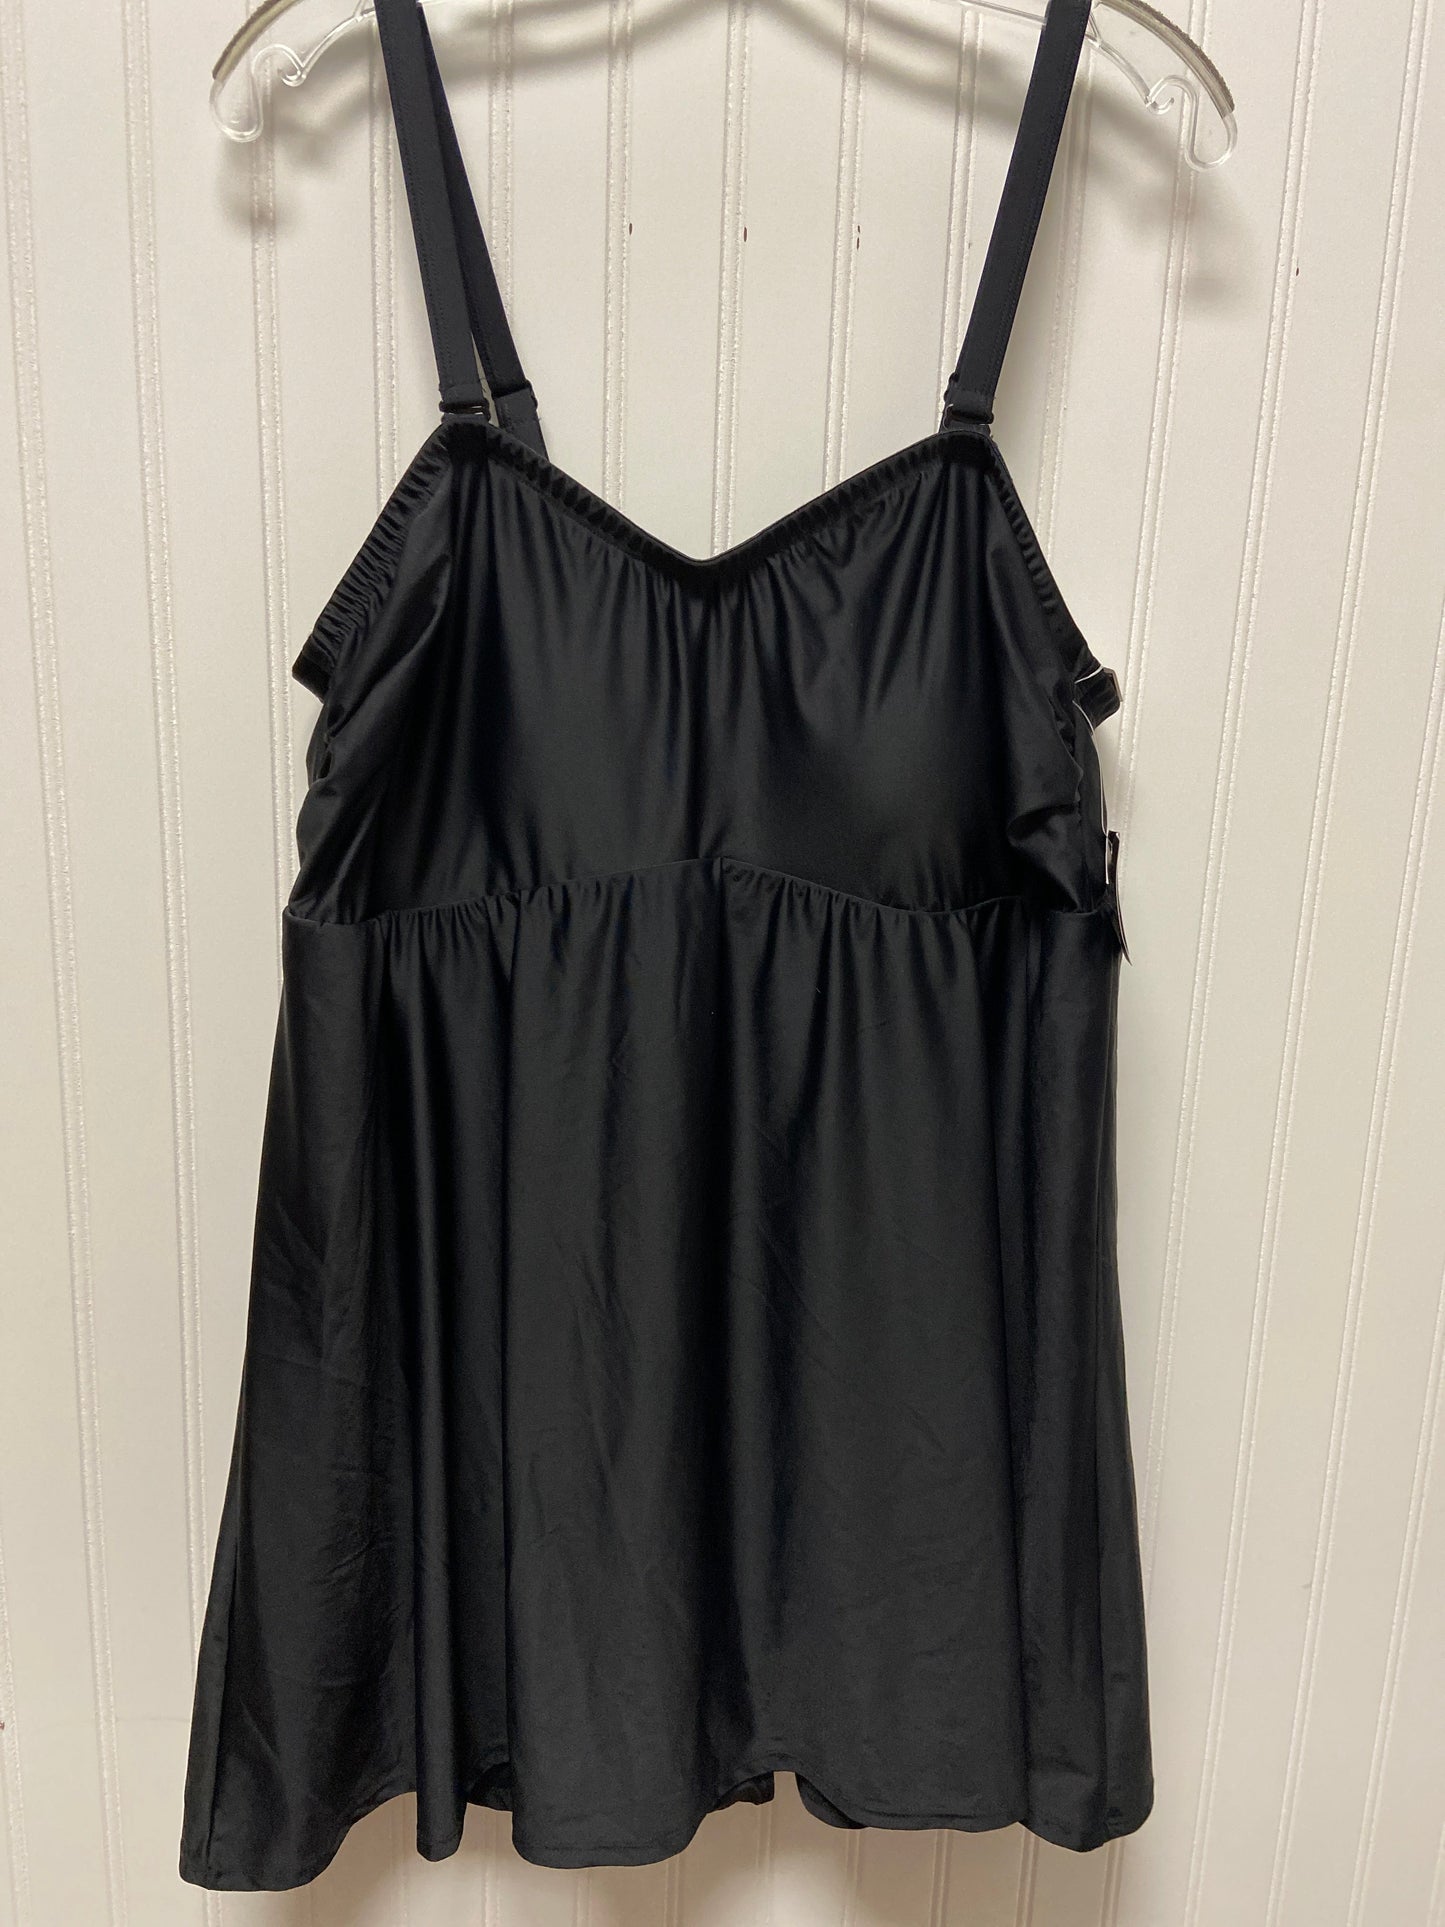 Black Swimsuit Top Torrid, Size 3x